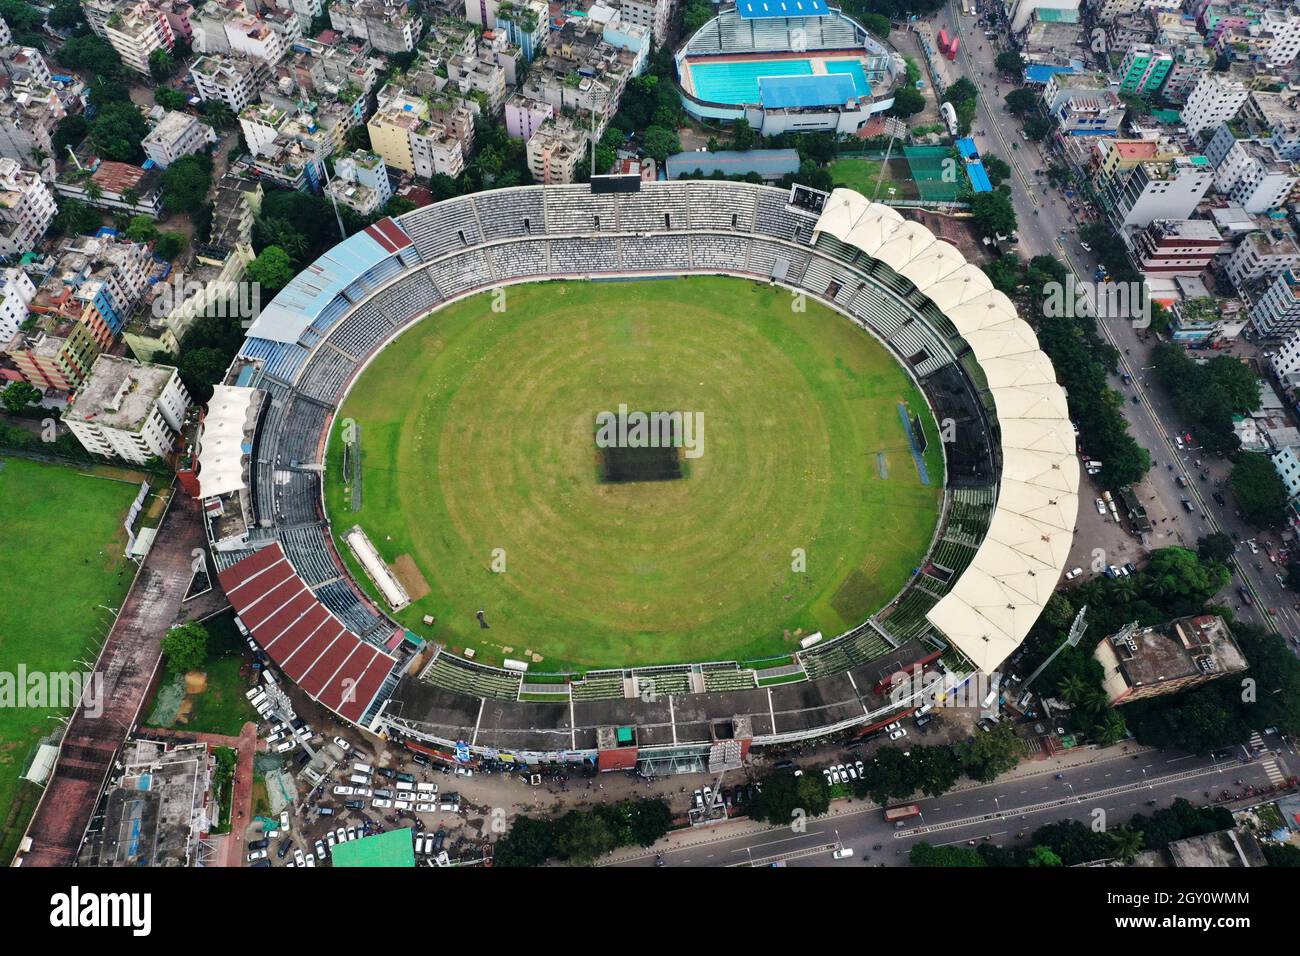 Dhaka, Bangladesh - October 06, 2021: The Sher-e-Bangla National Cricket Stadium, also called Mirpur Stadium, is an International cricket ground in Dh Stock Photo